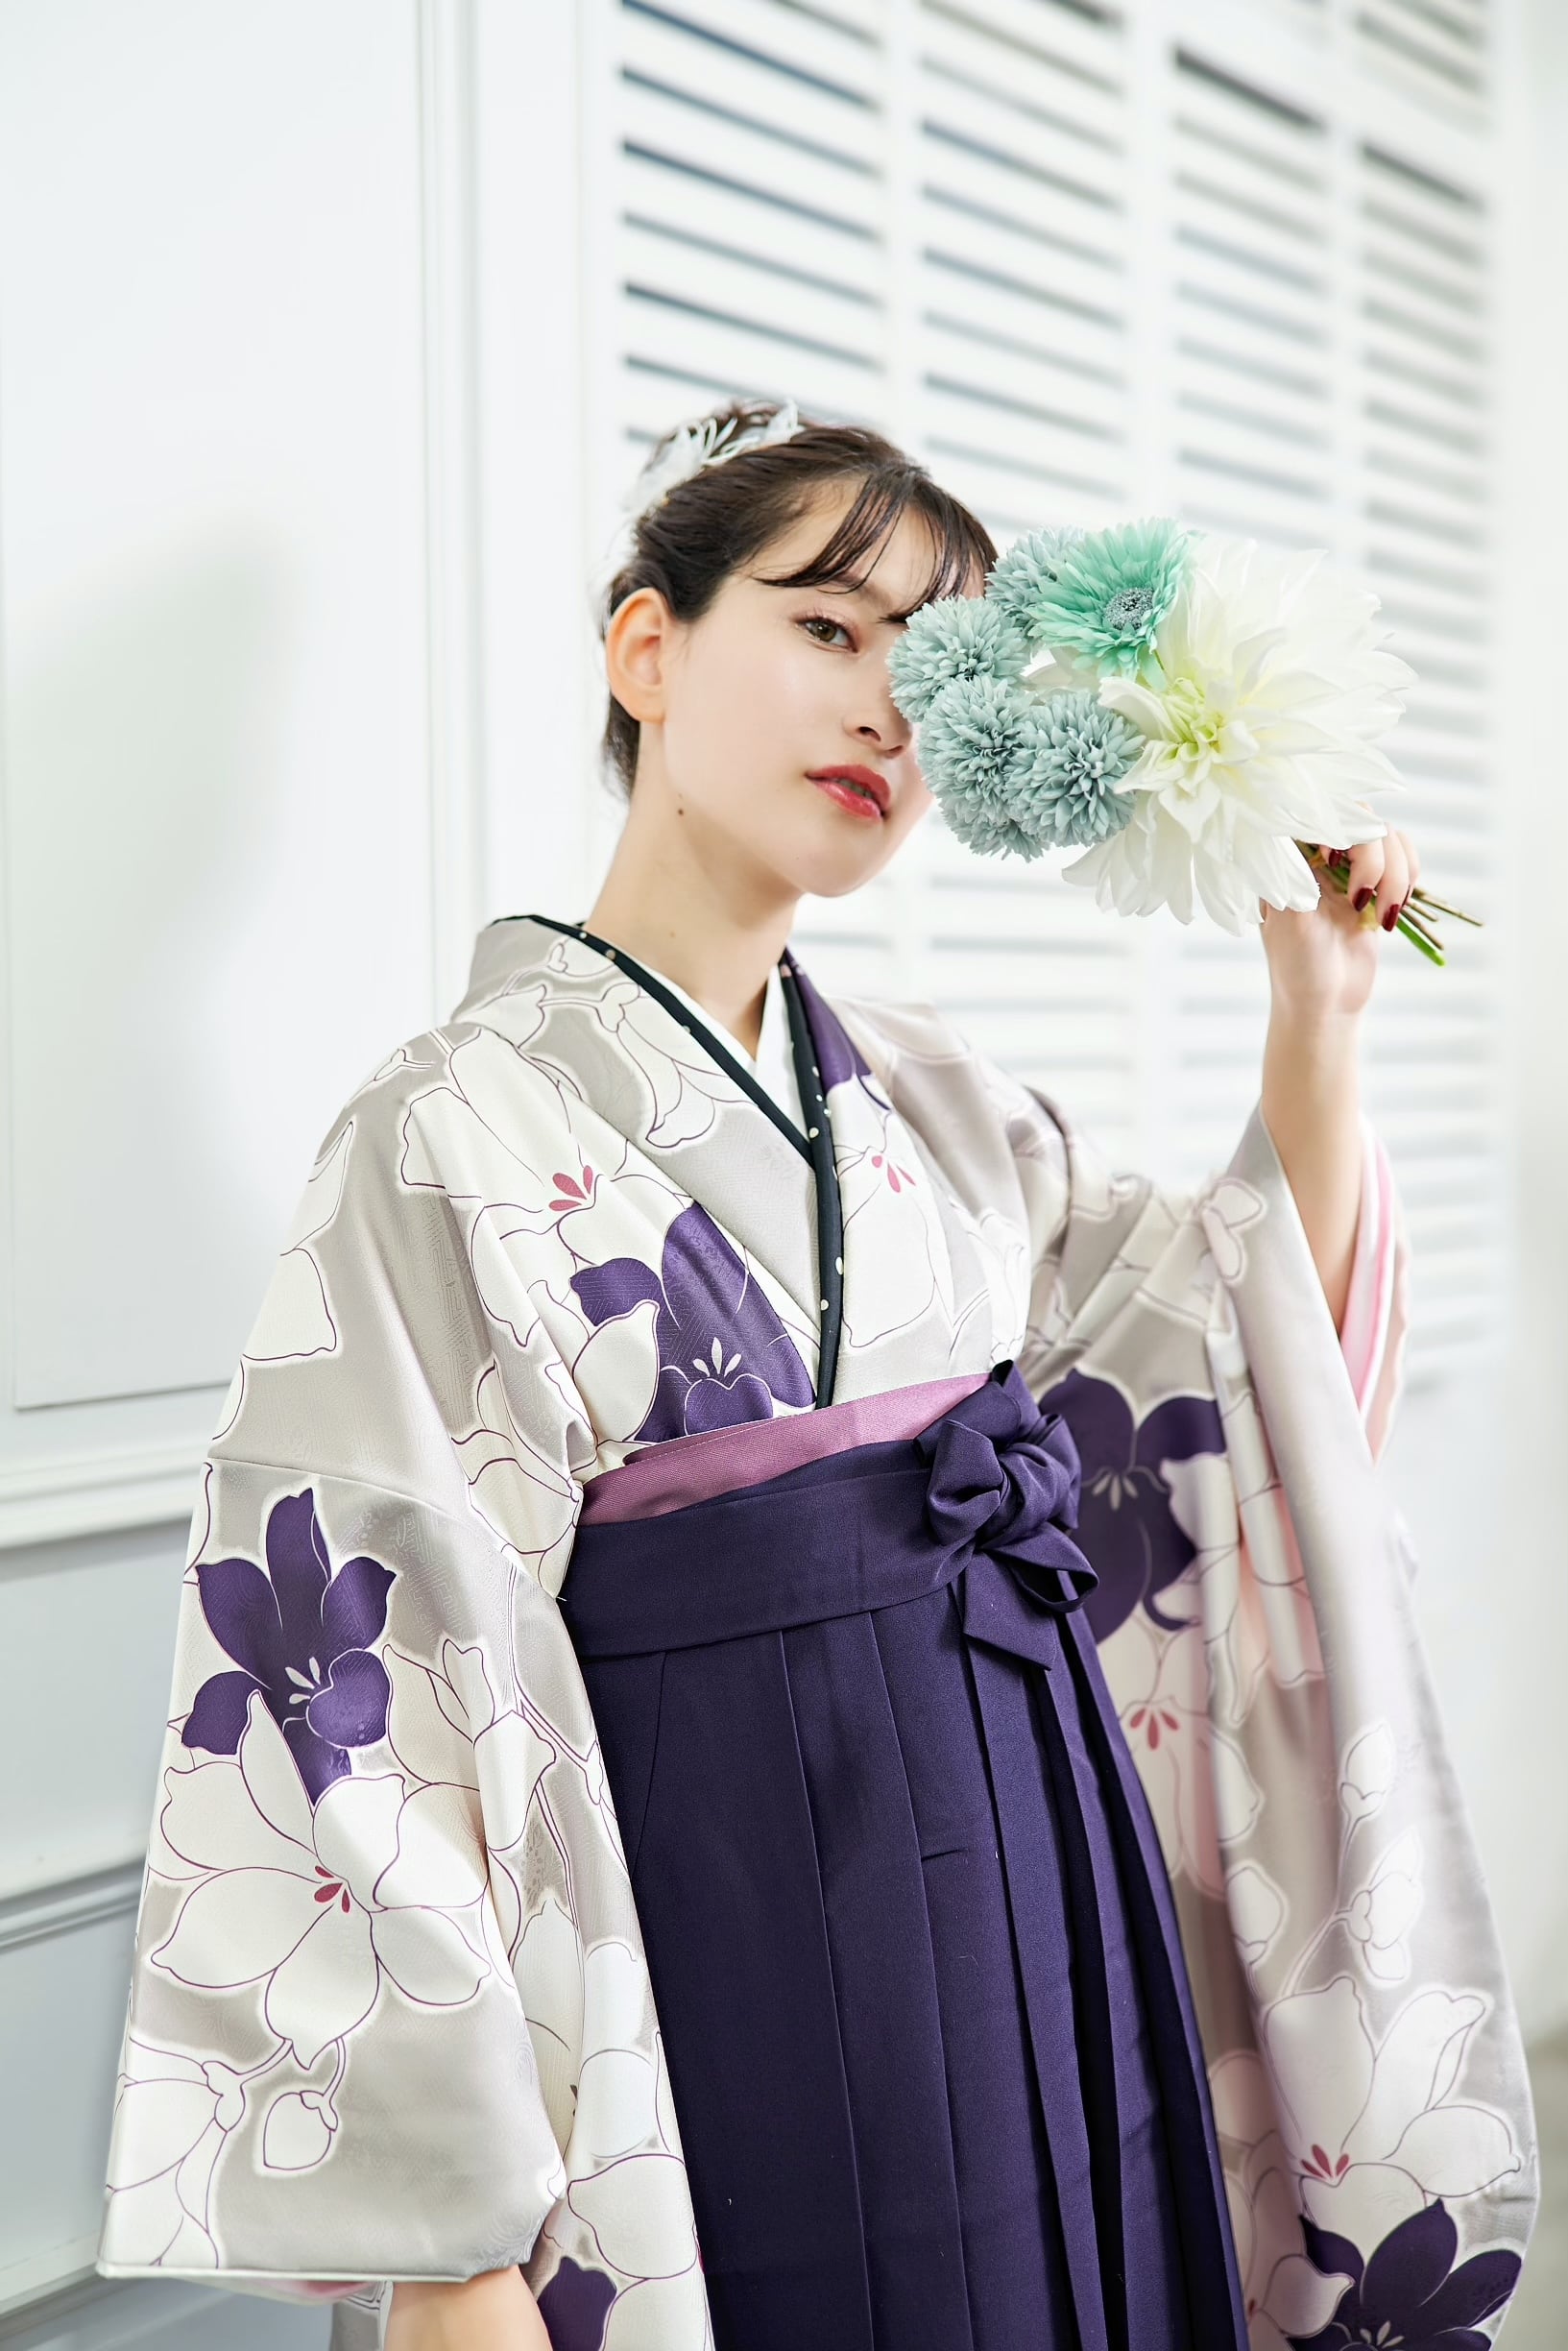 Kimono Sienne 卒業式袴3点セット グレージュ 白 紫 袴 二尺袖着物 袴 卒業式 | Kimono Sienne